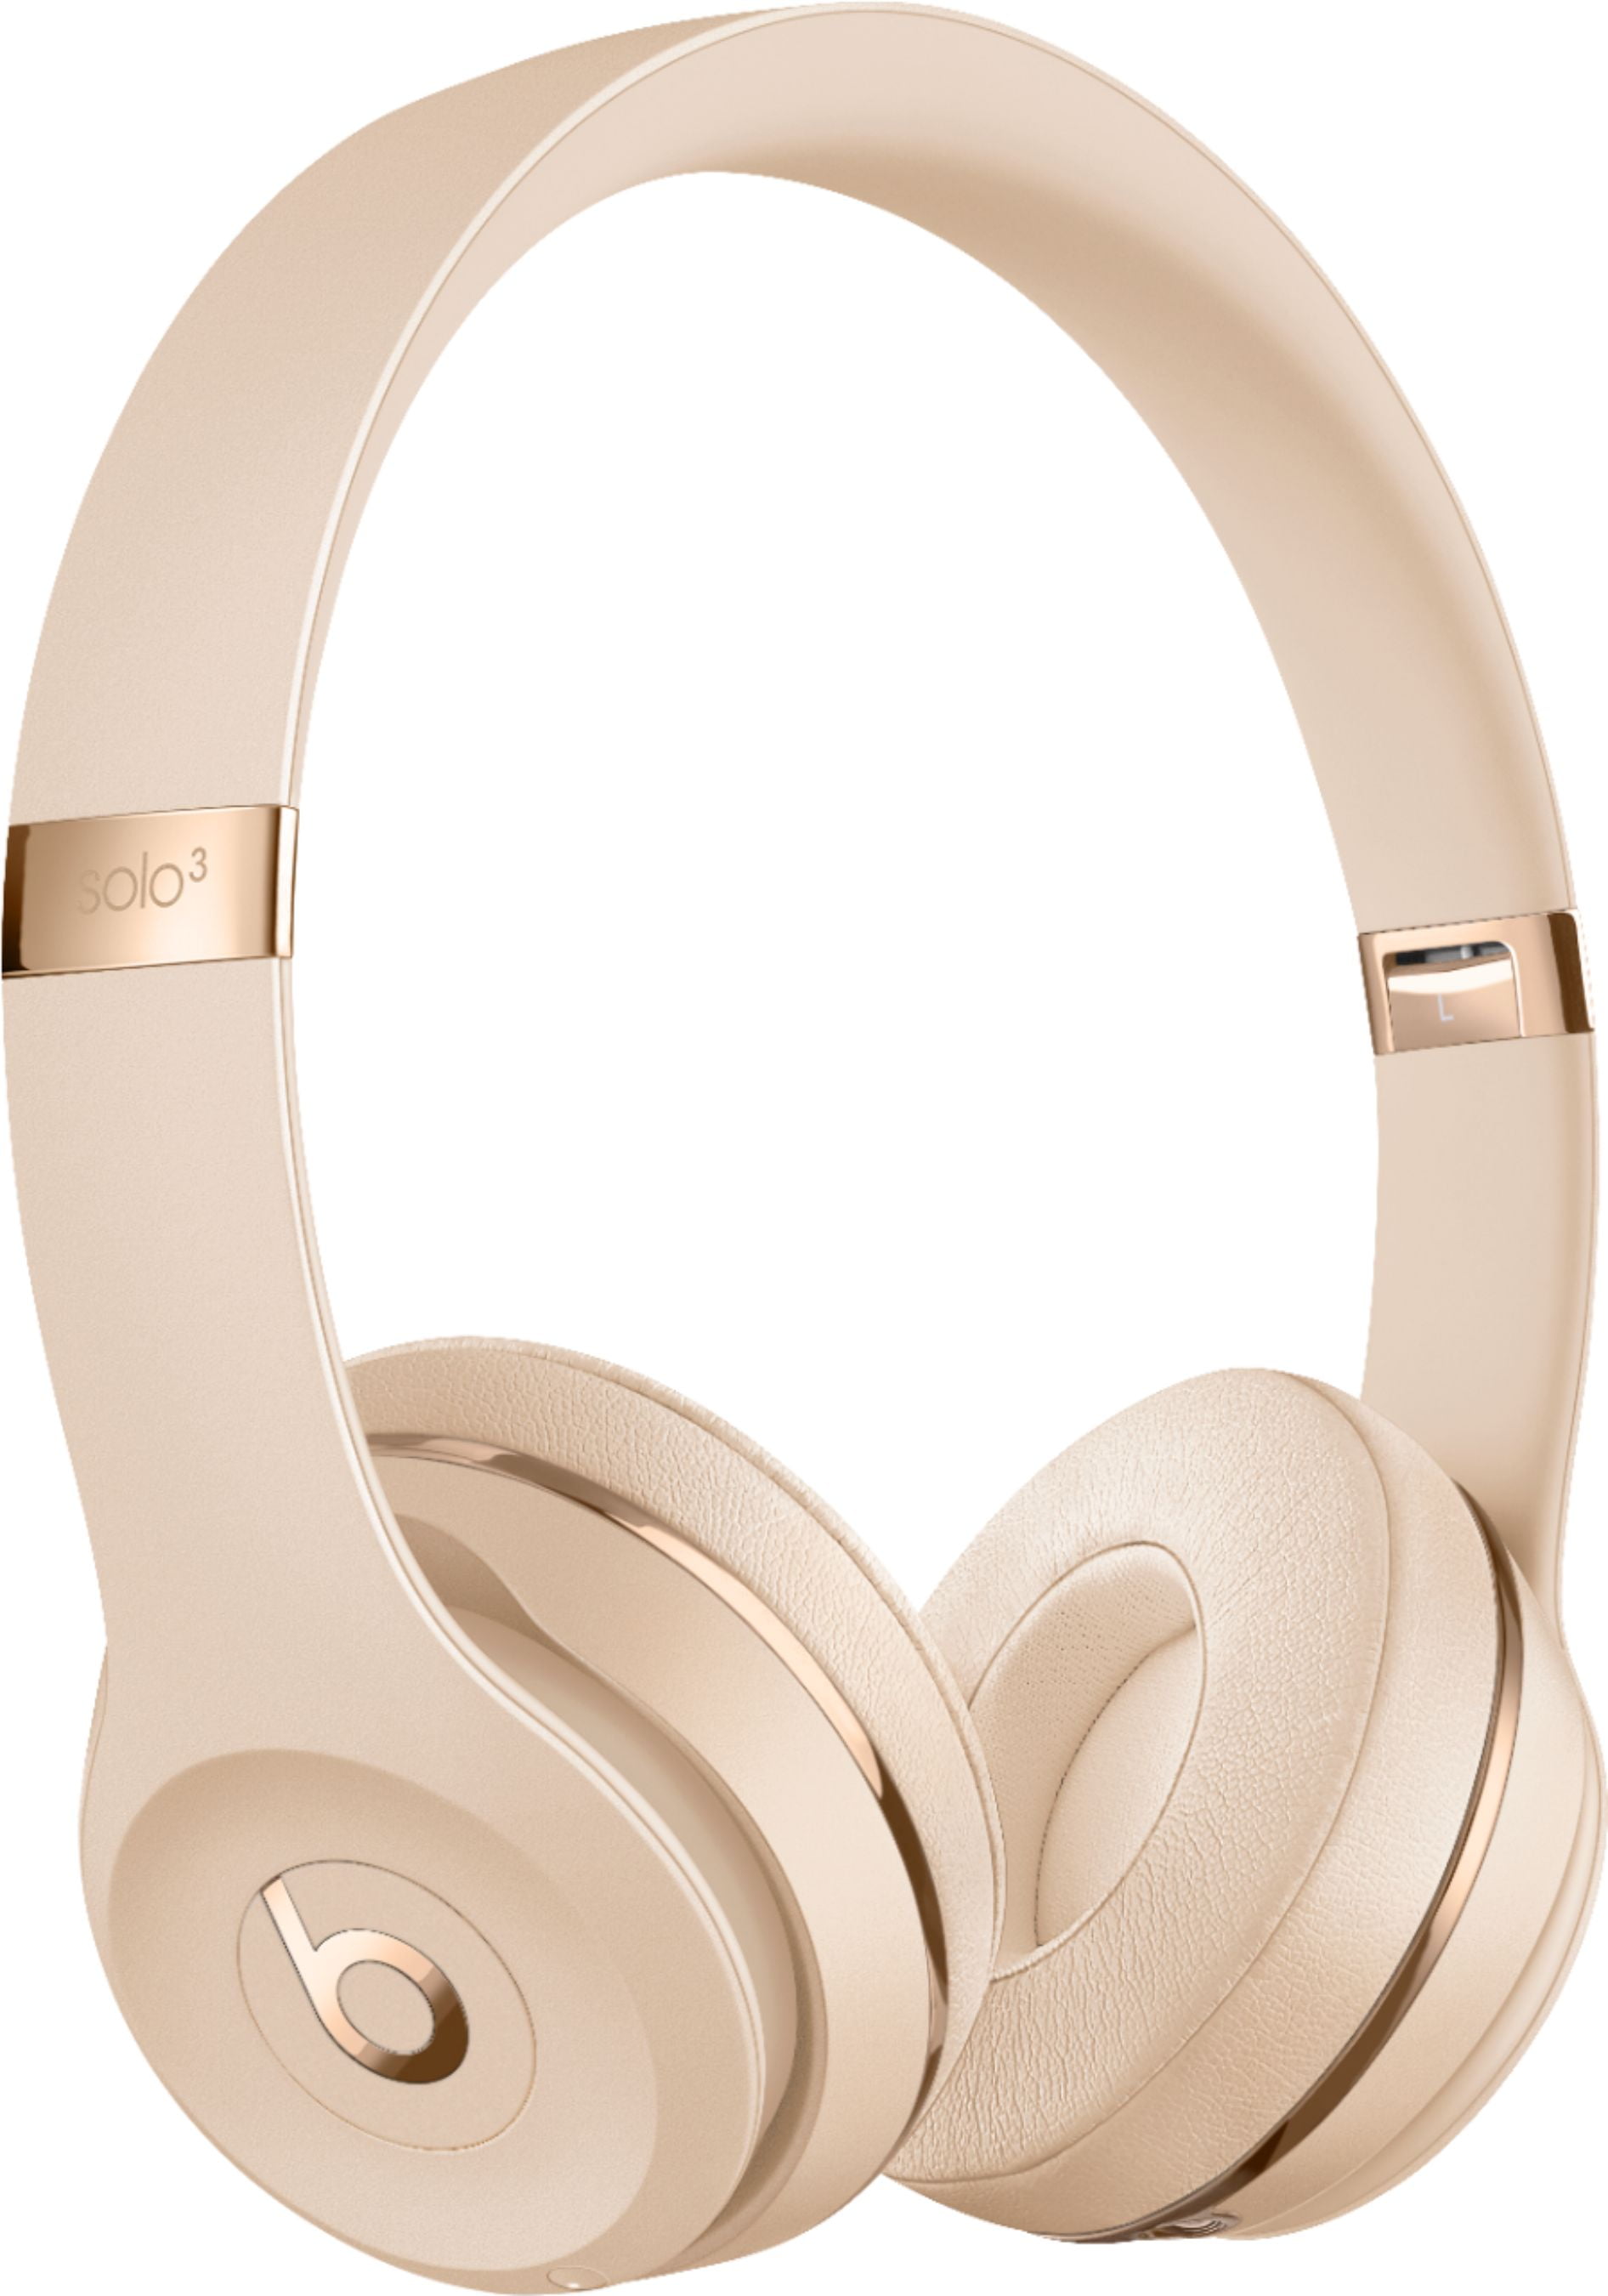 Restored Beats by Dr. Dre Beats Solo3 Wireless Headphones - Satin Gold MX462LL/A (Refurbished) - Walmart.com